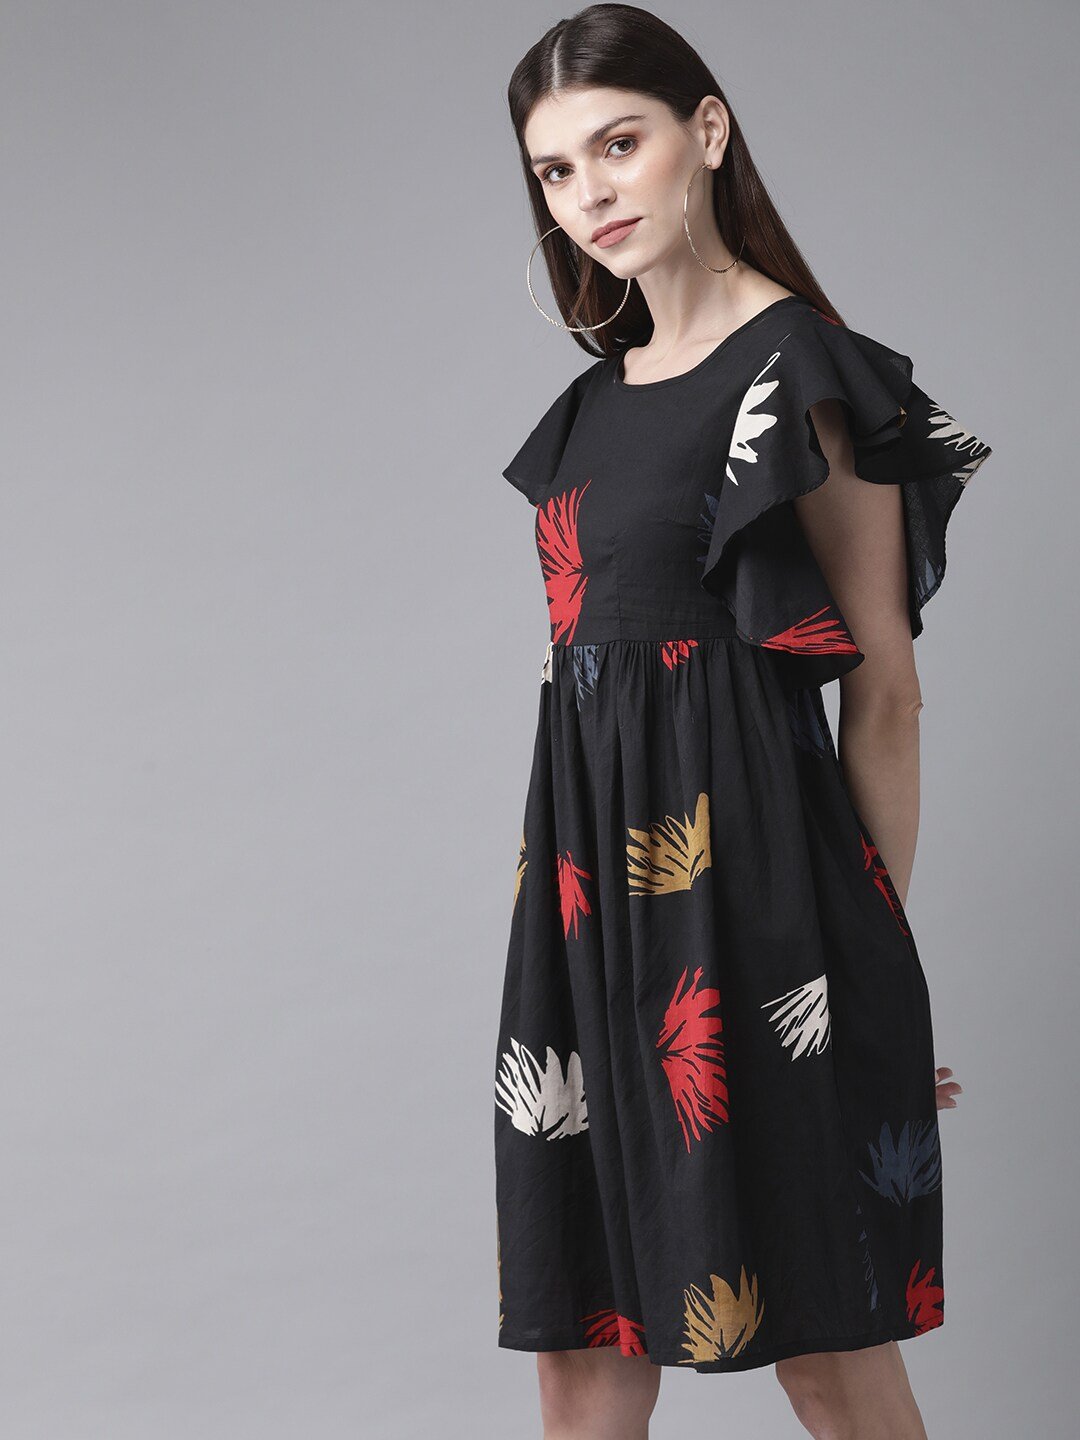 Women's  Black & Red Printed A-Line Dress - AKS